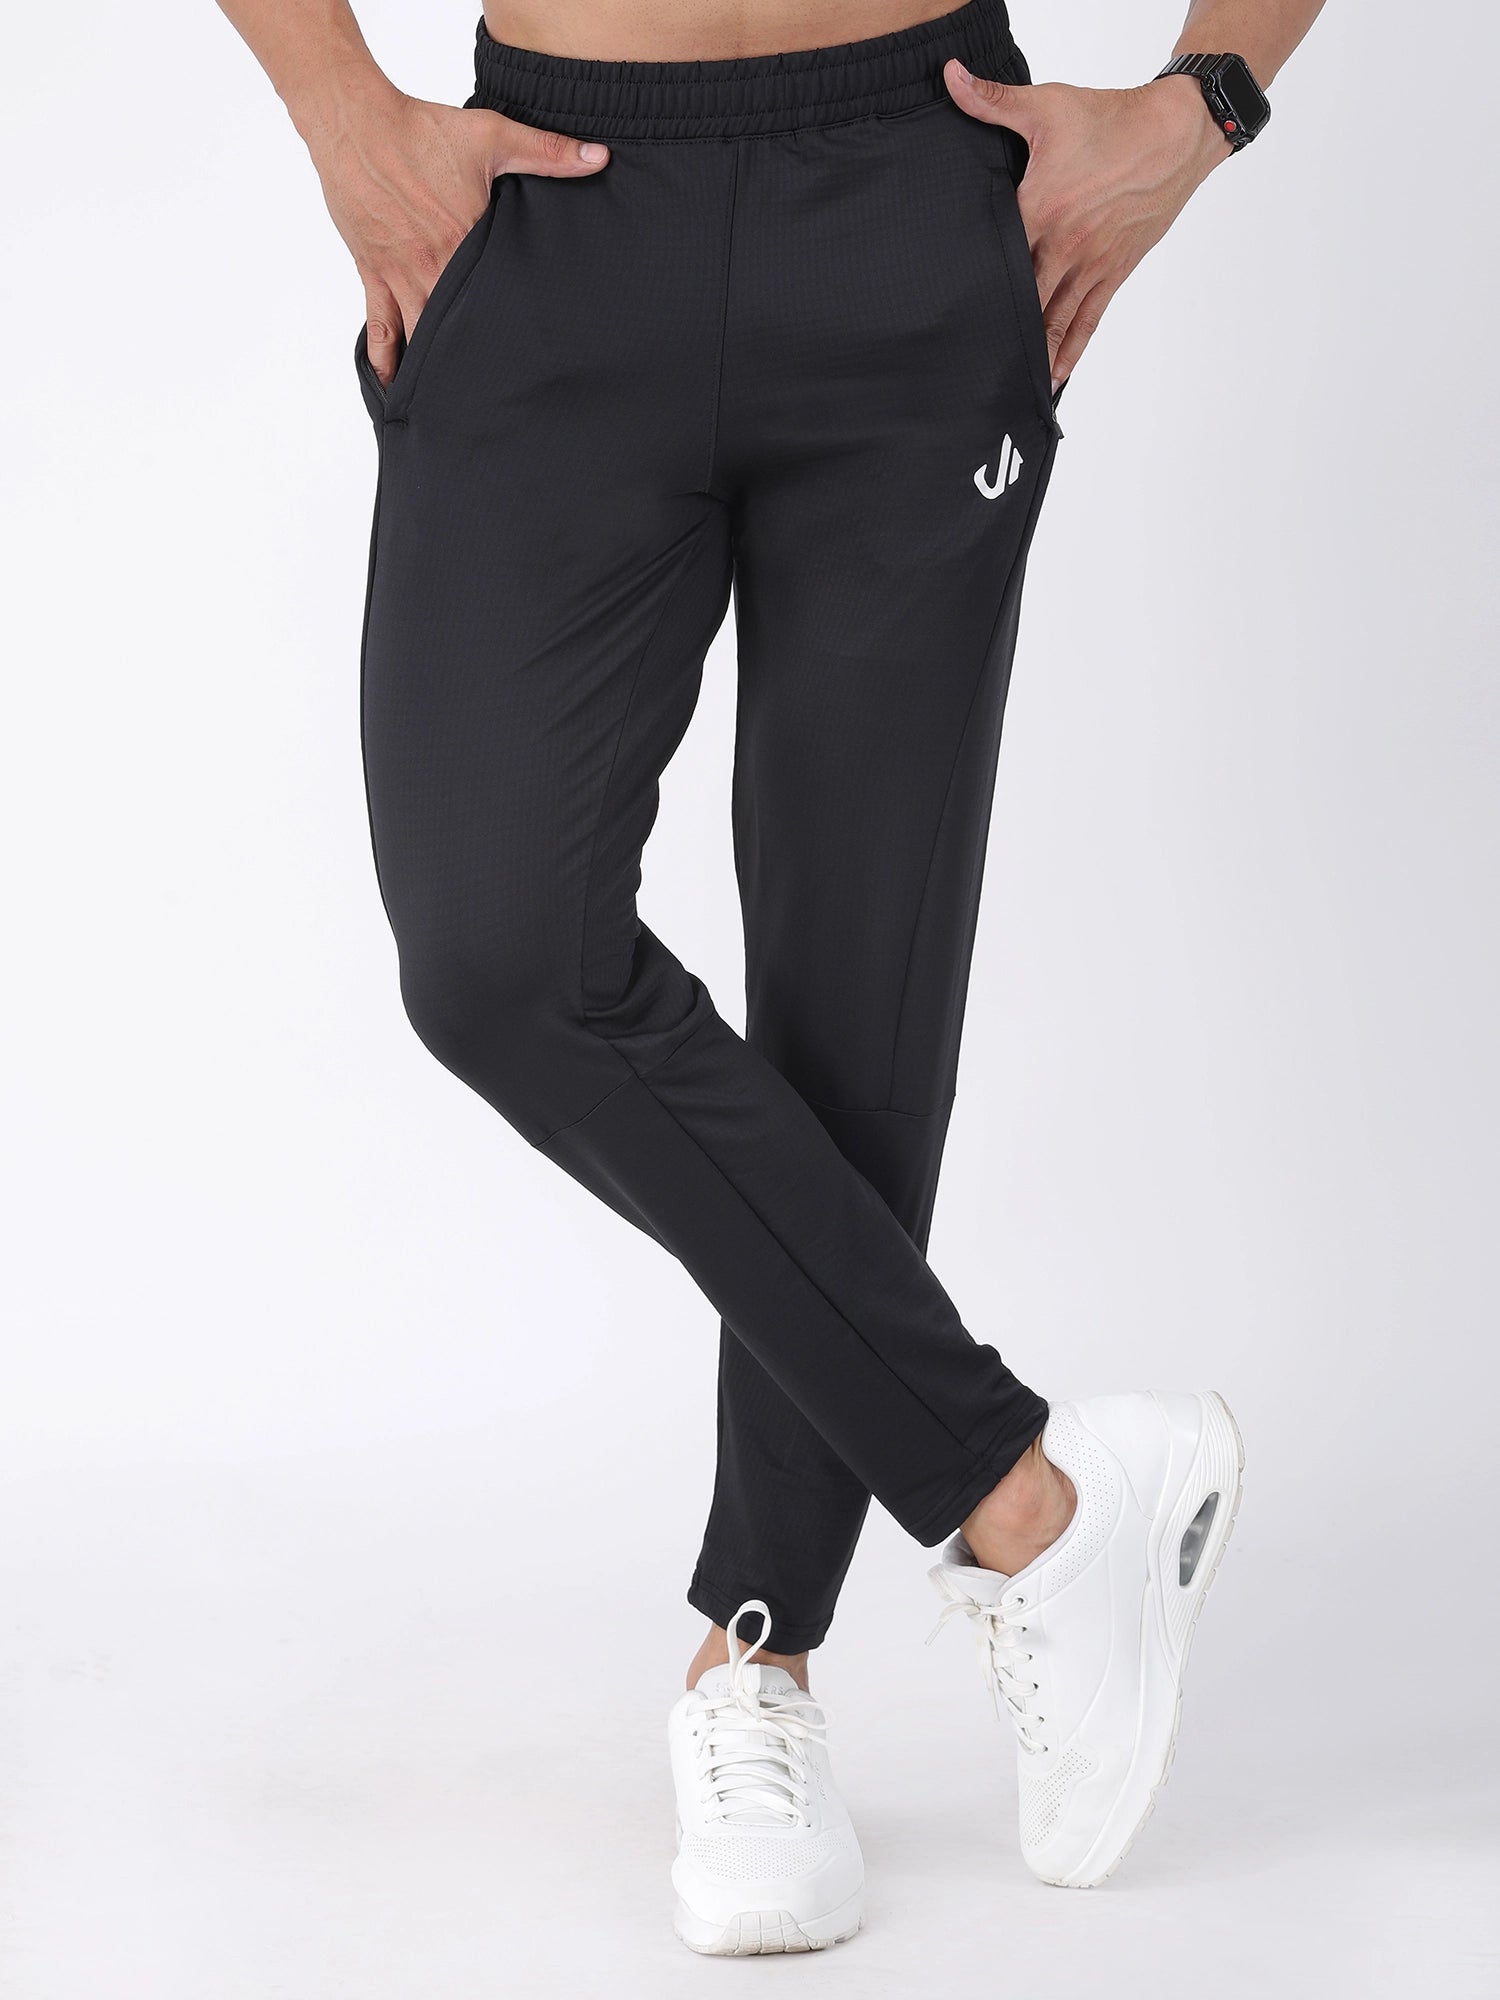 Vero Moda Black Polyester Regular Fit High Rise Pants